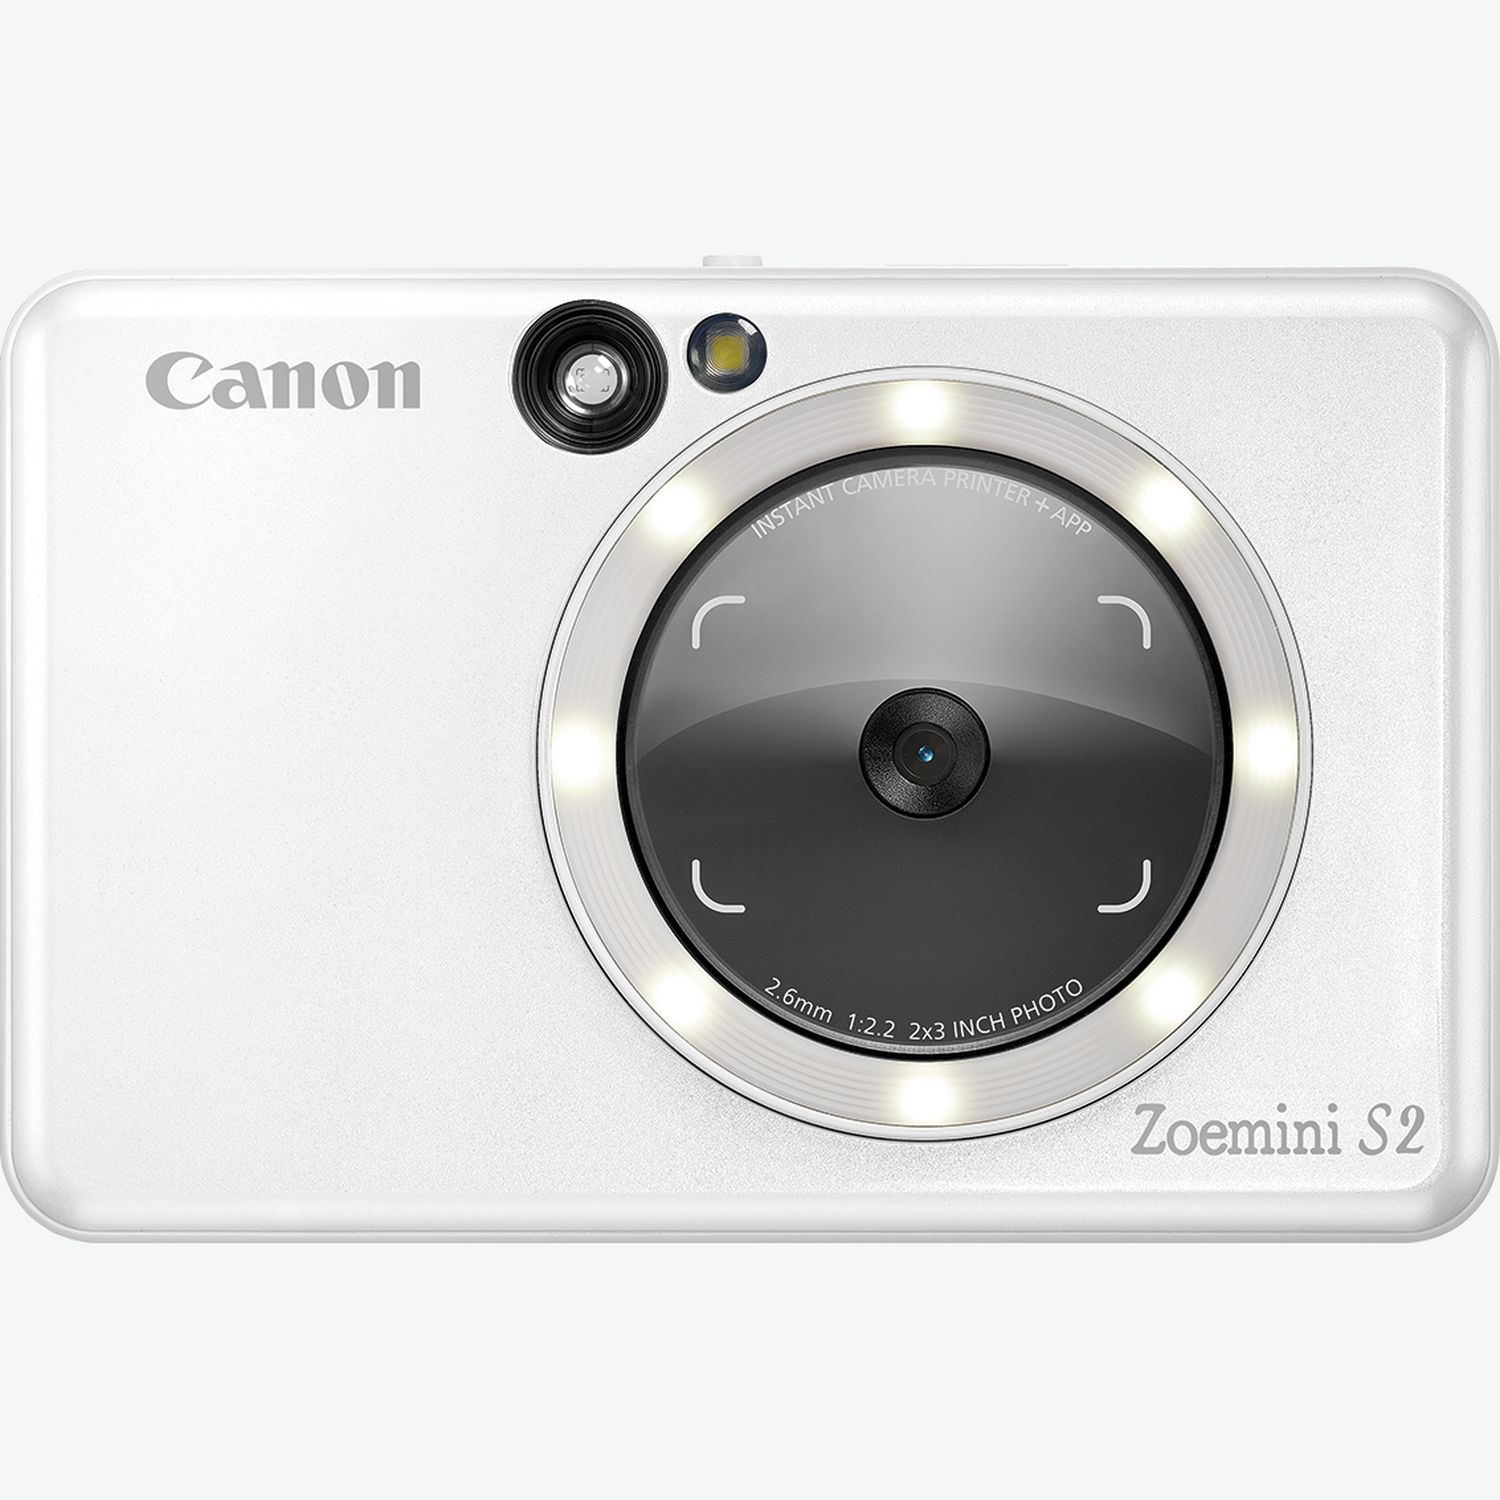 Canon Zoemini - Imprimante photo portable - Noir - Imprimante